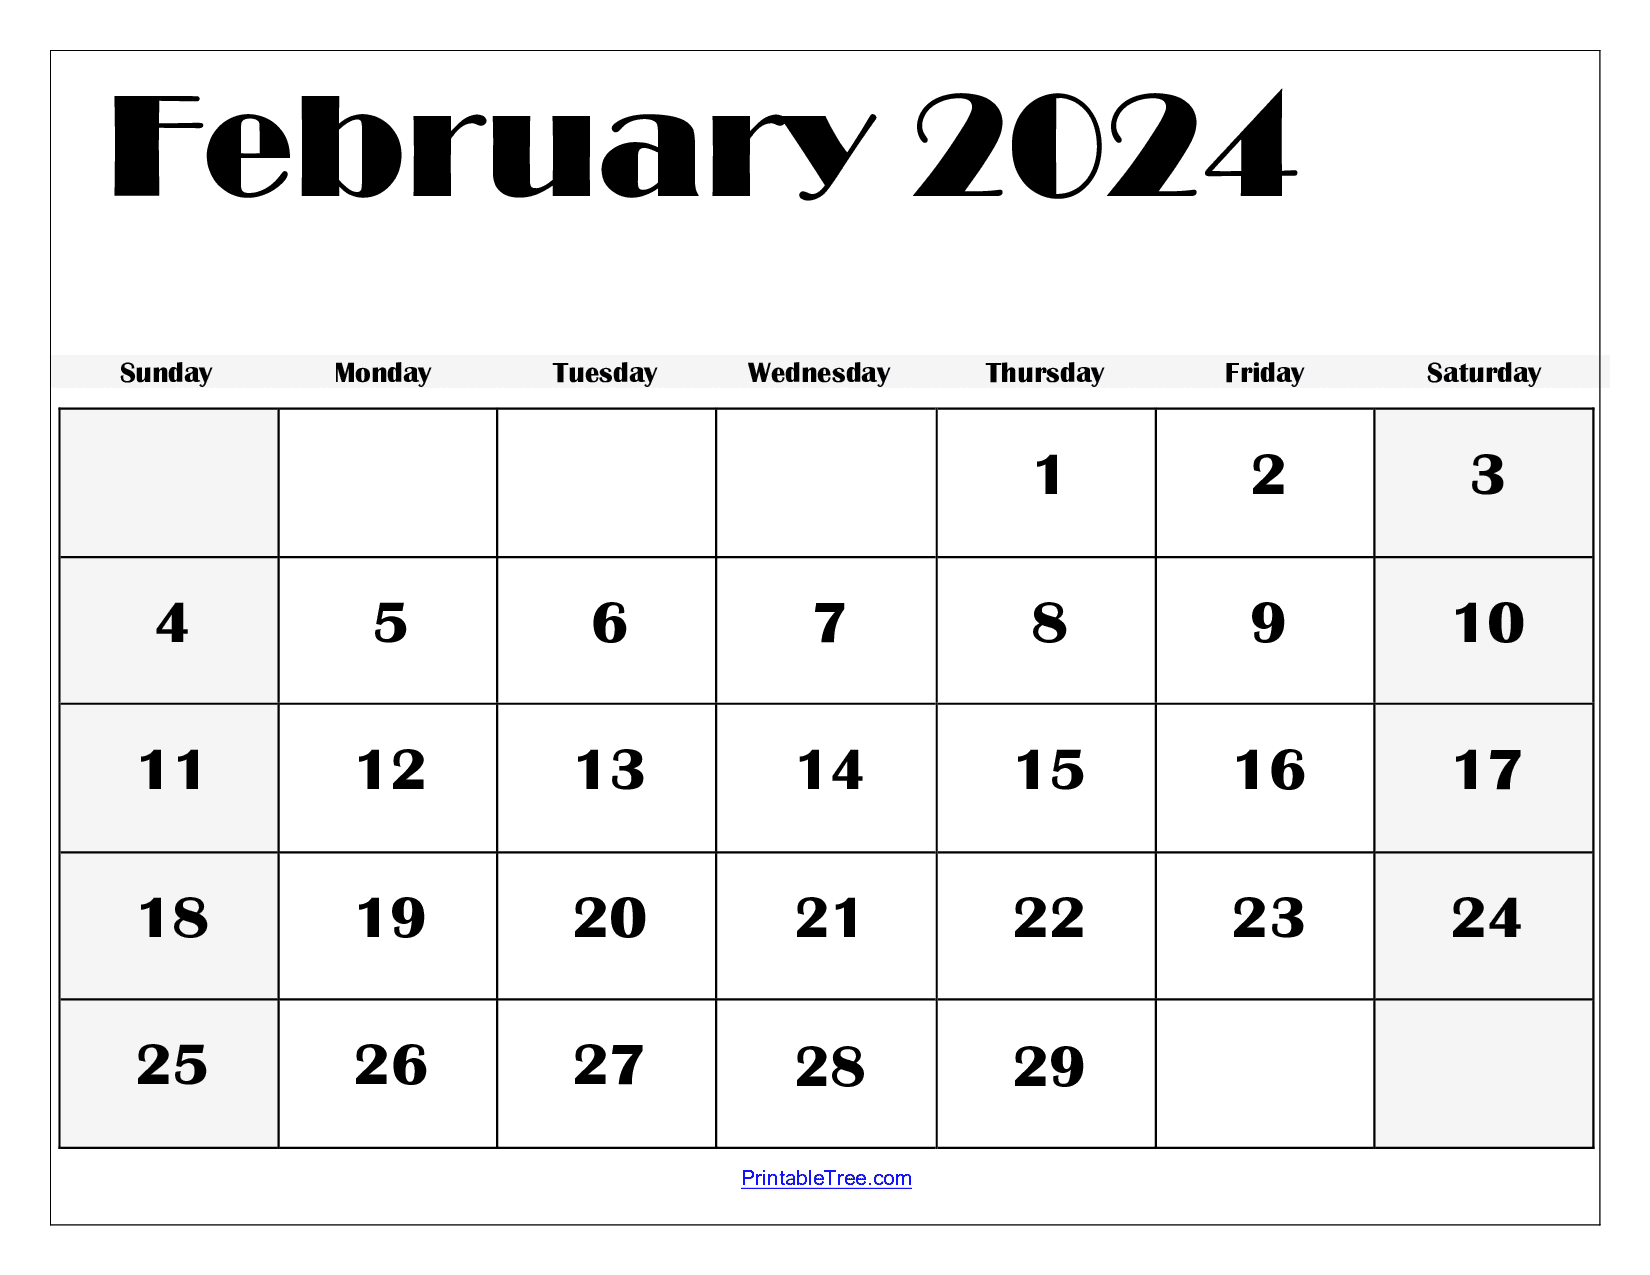 February 2024 Calendar Printable Pdf Template With Holidays for February 2024 Calendar With Holidays Free Printable